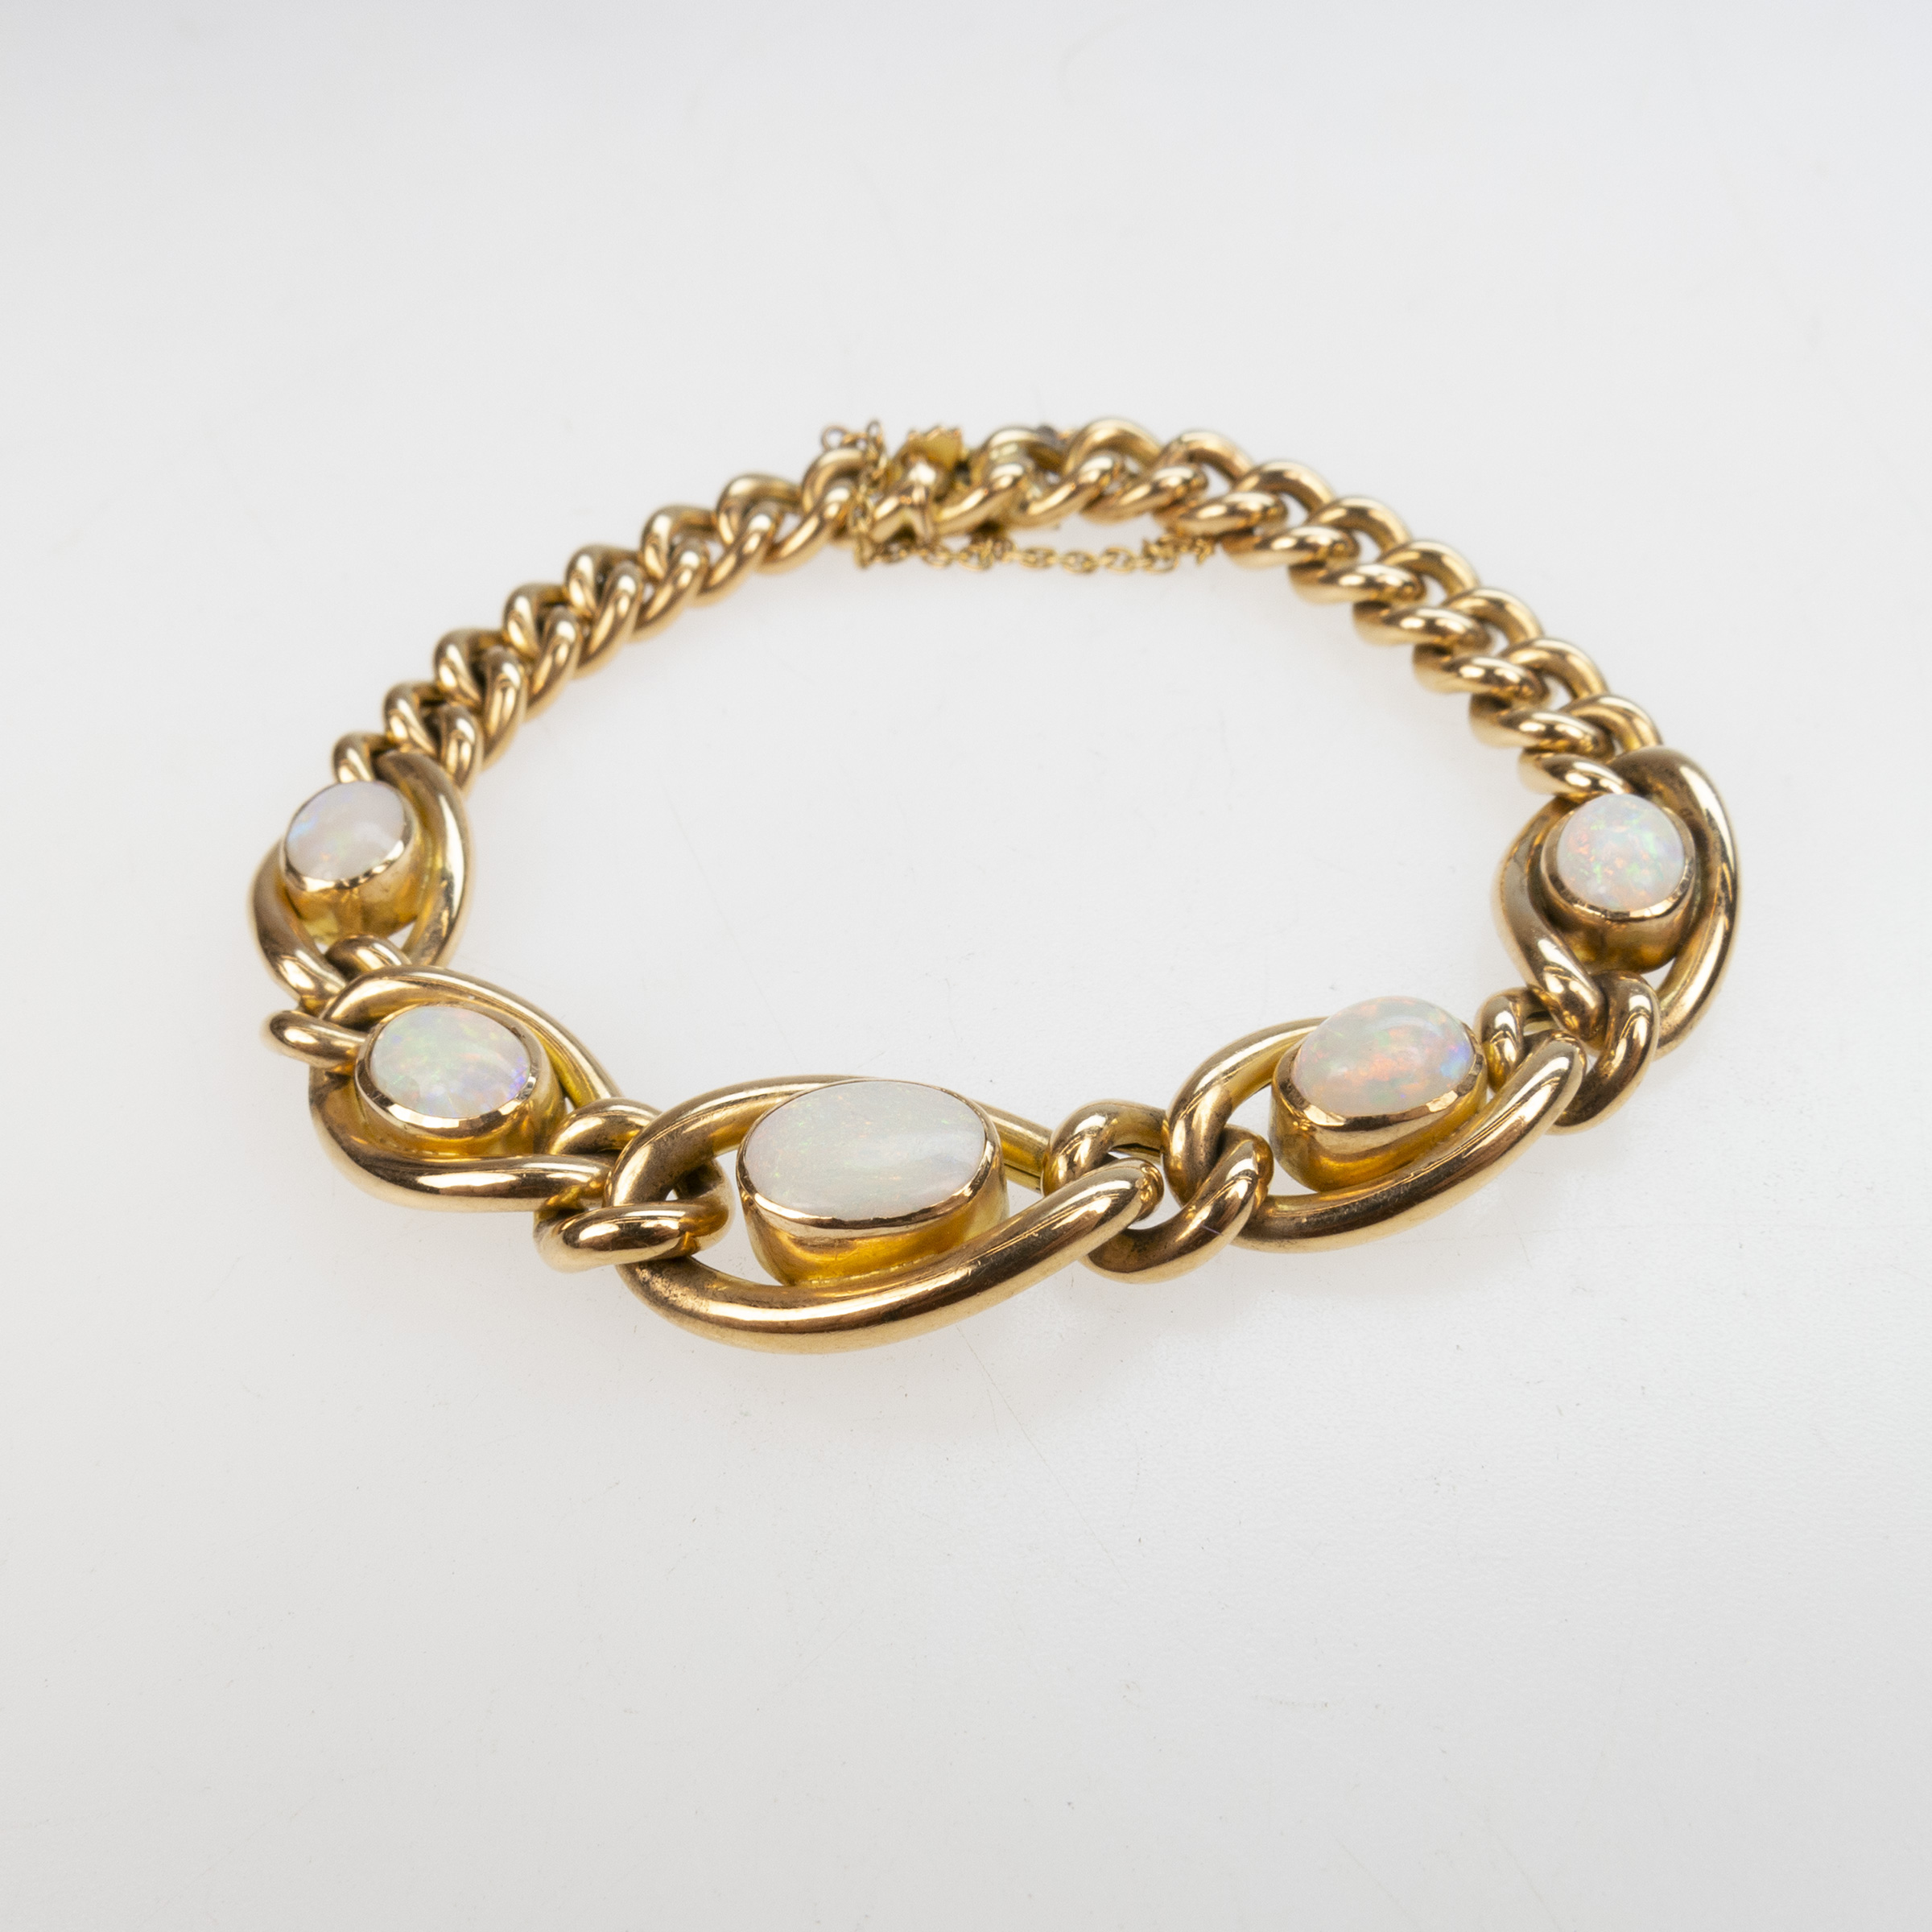 English 15k Yellow Gold Curb Link Bracelet